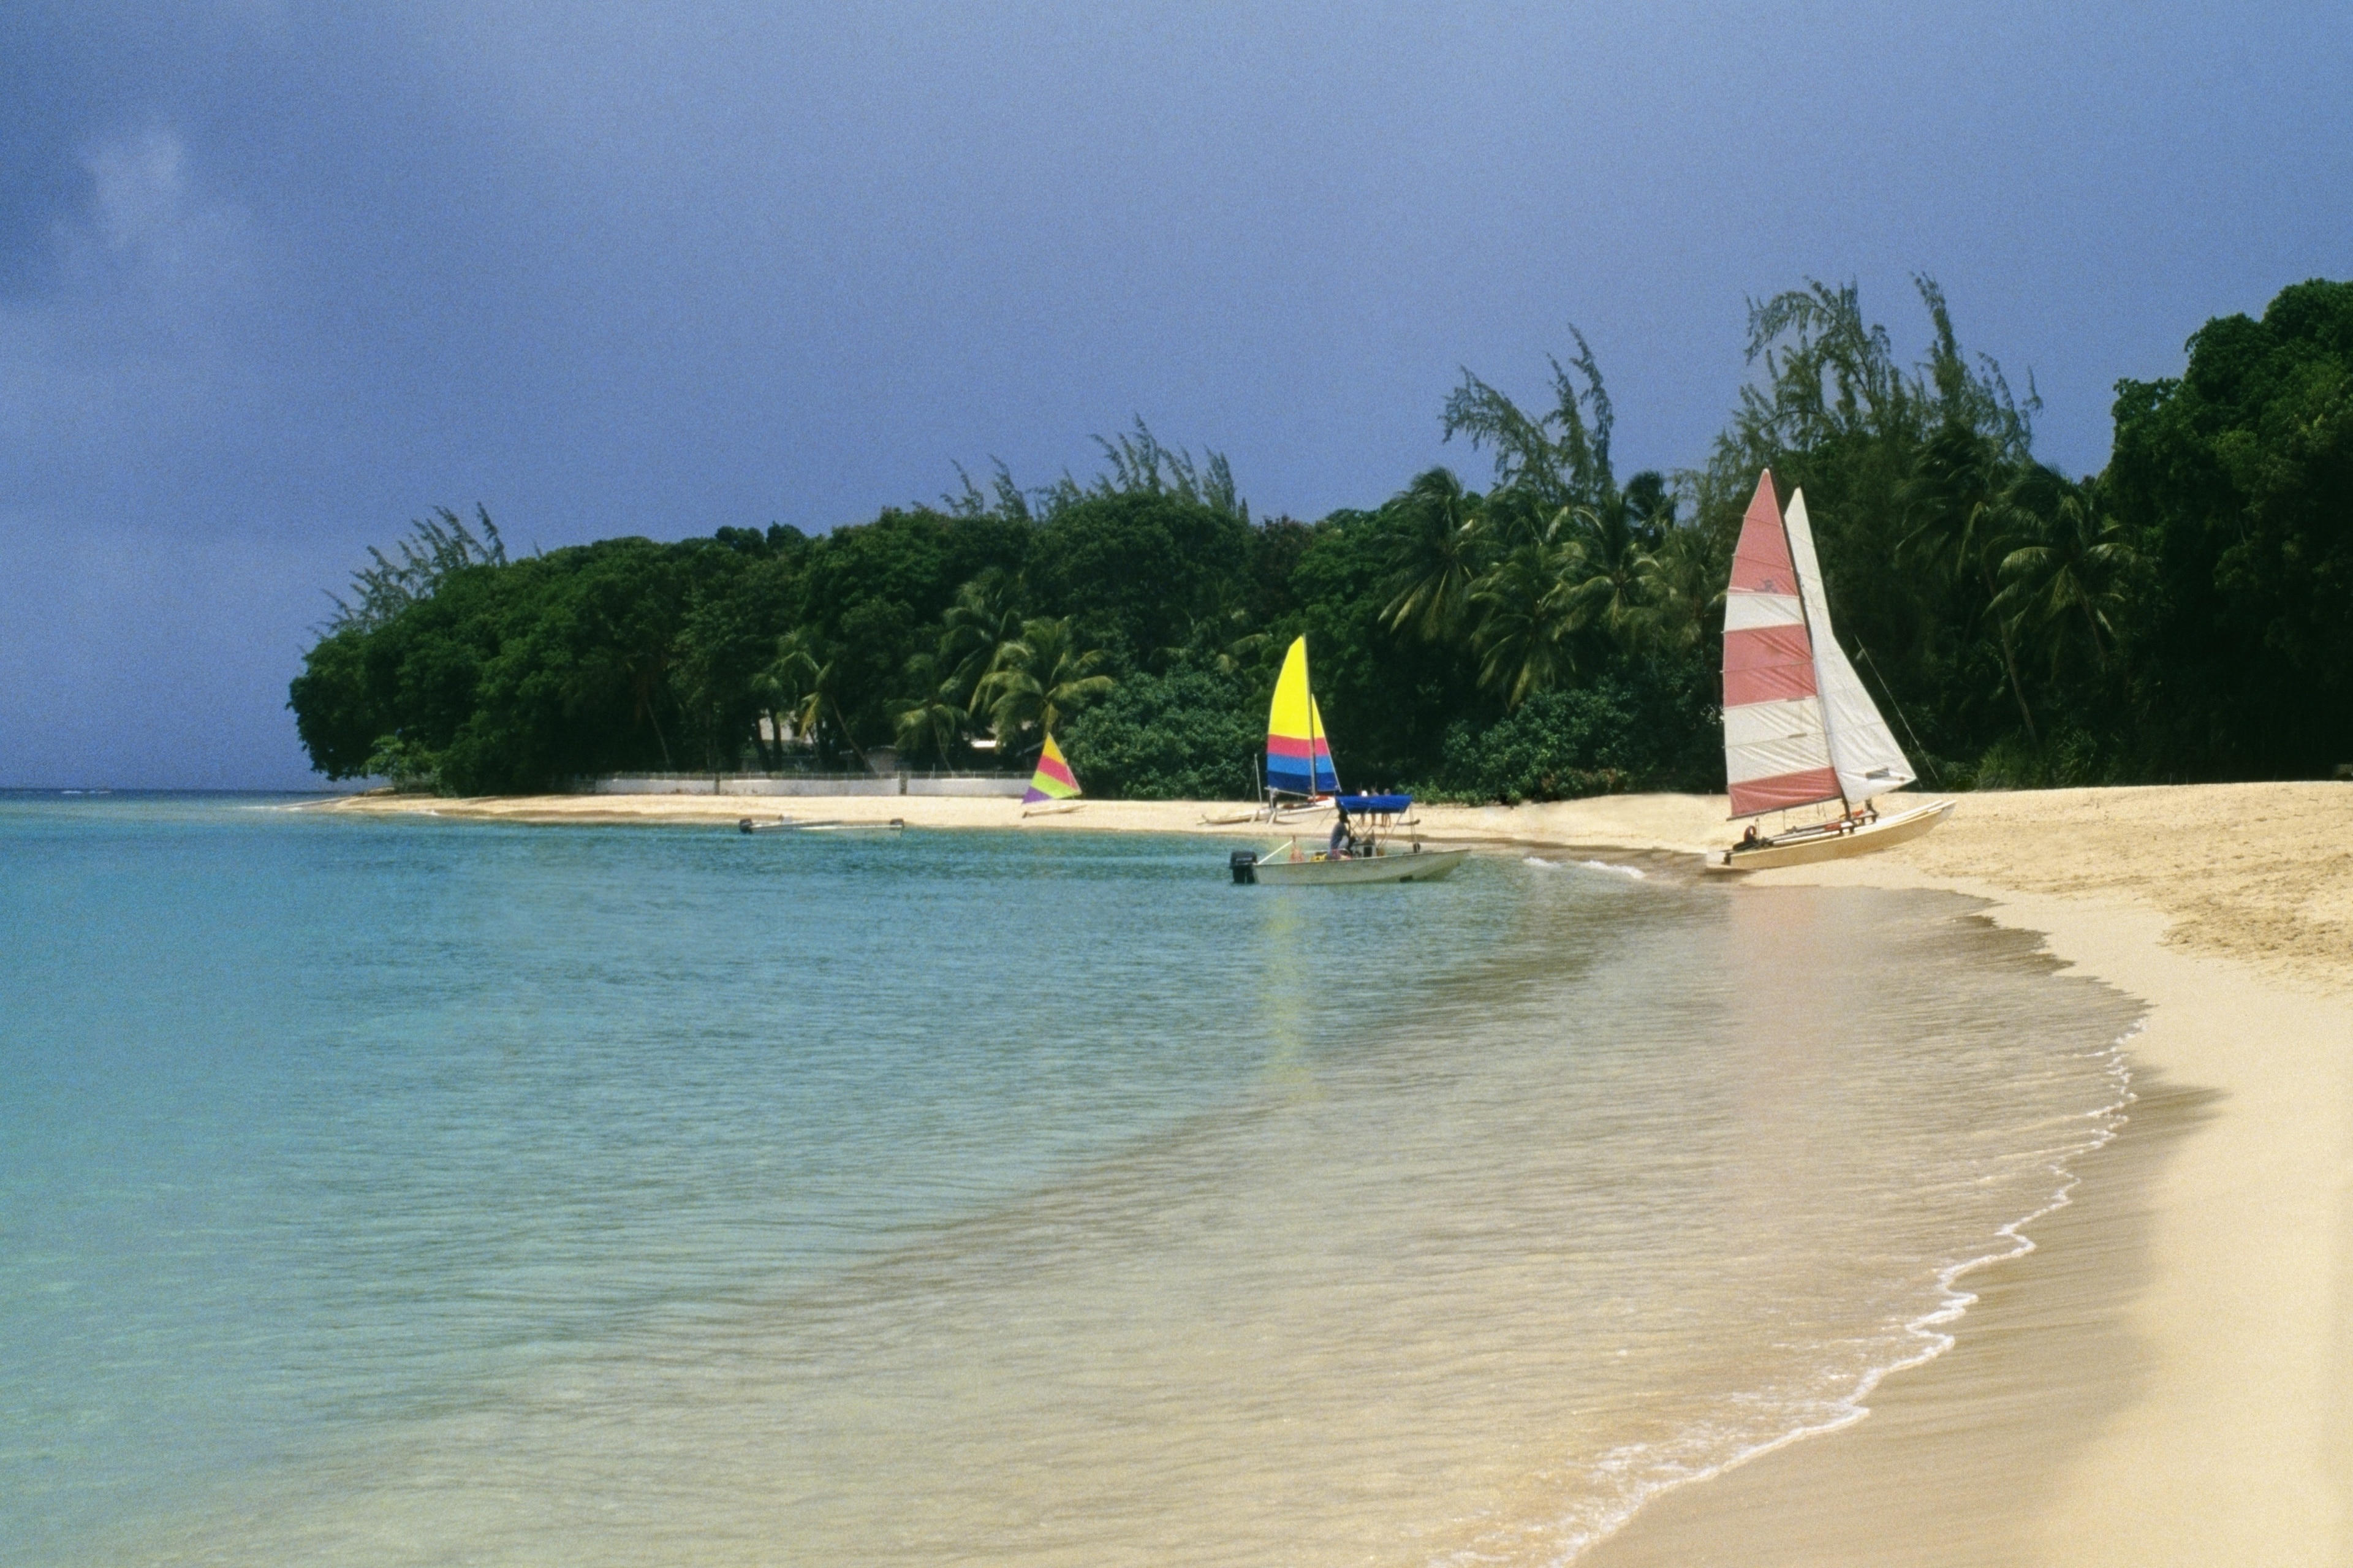 Sandy Lane Beach, Holetown, St. James, Barbados